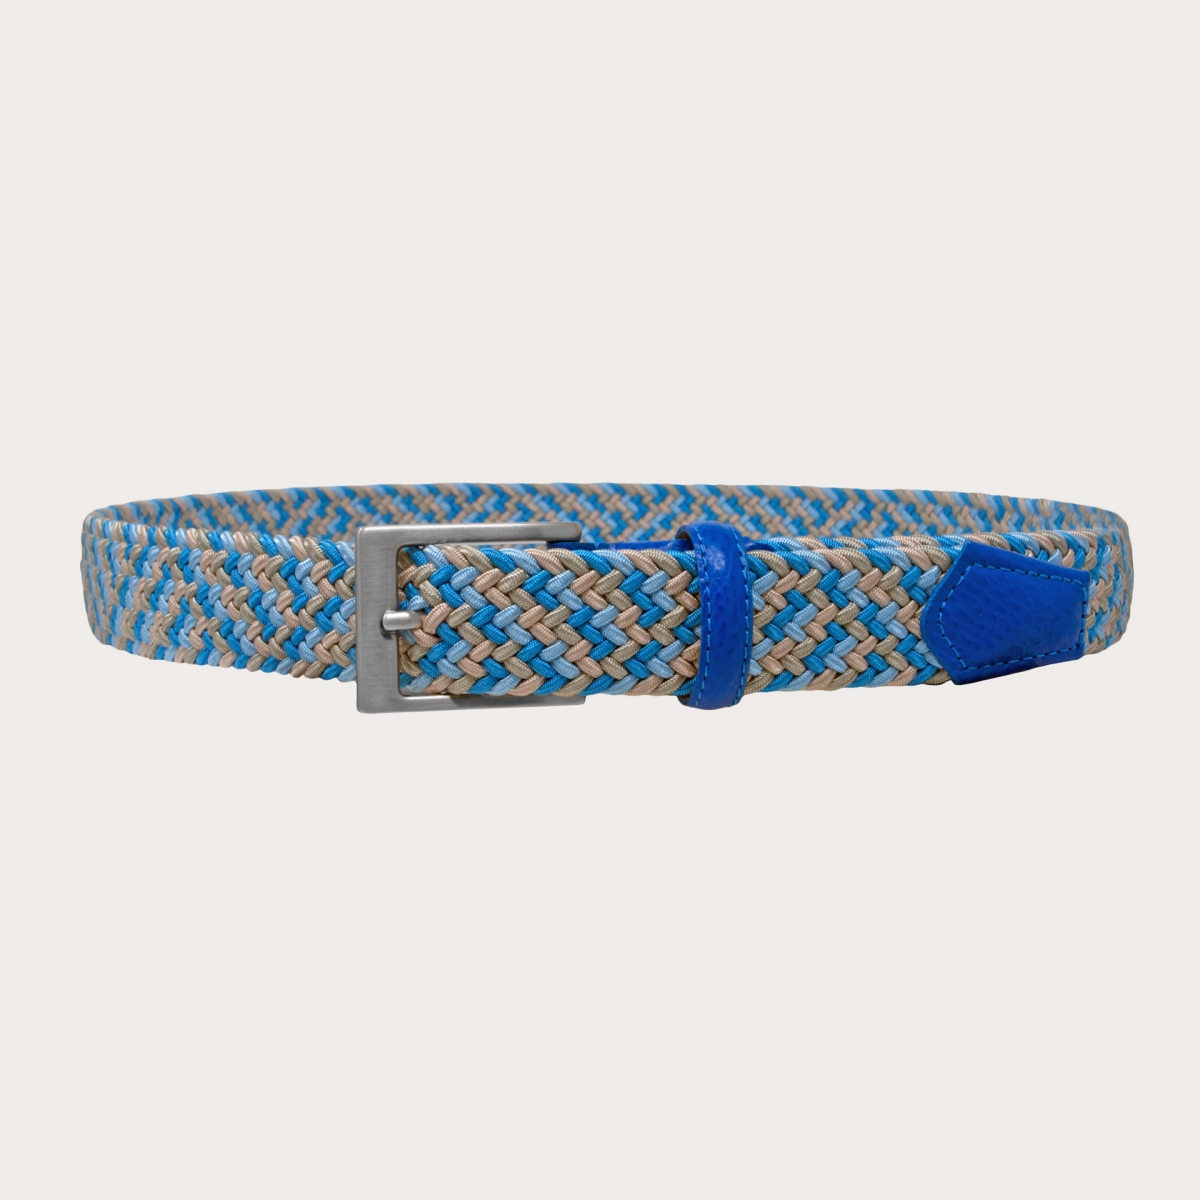 BRUCLE Braided elastic belt light blue light blue and beige